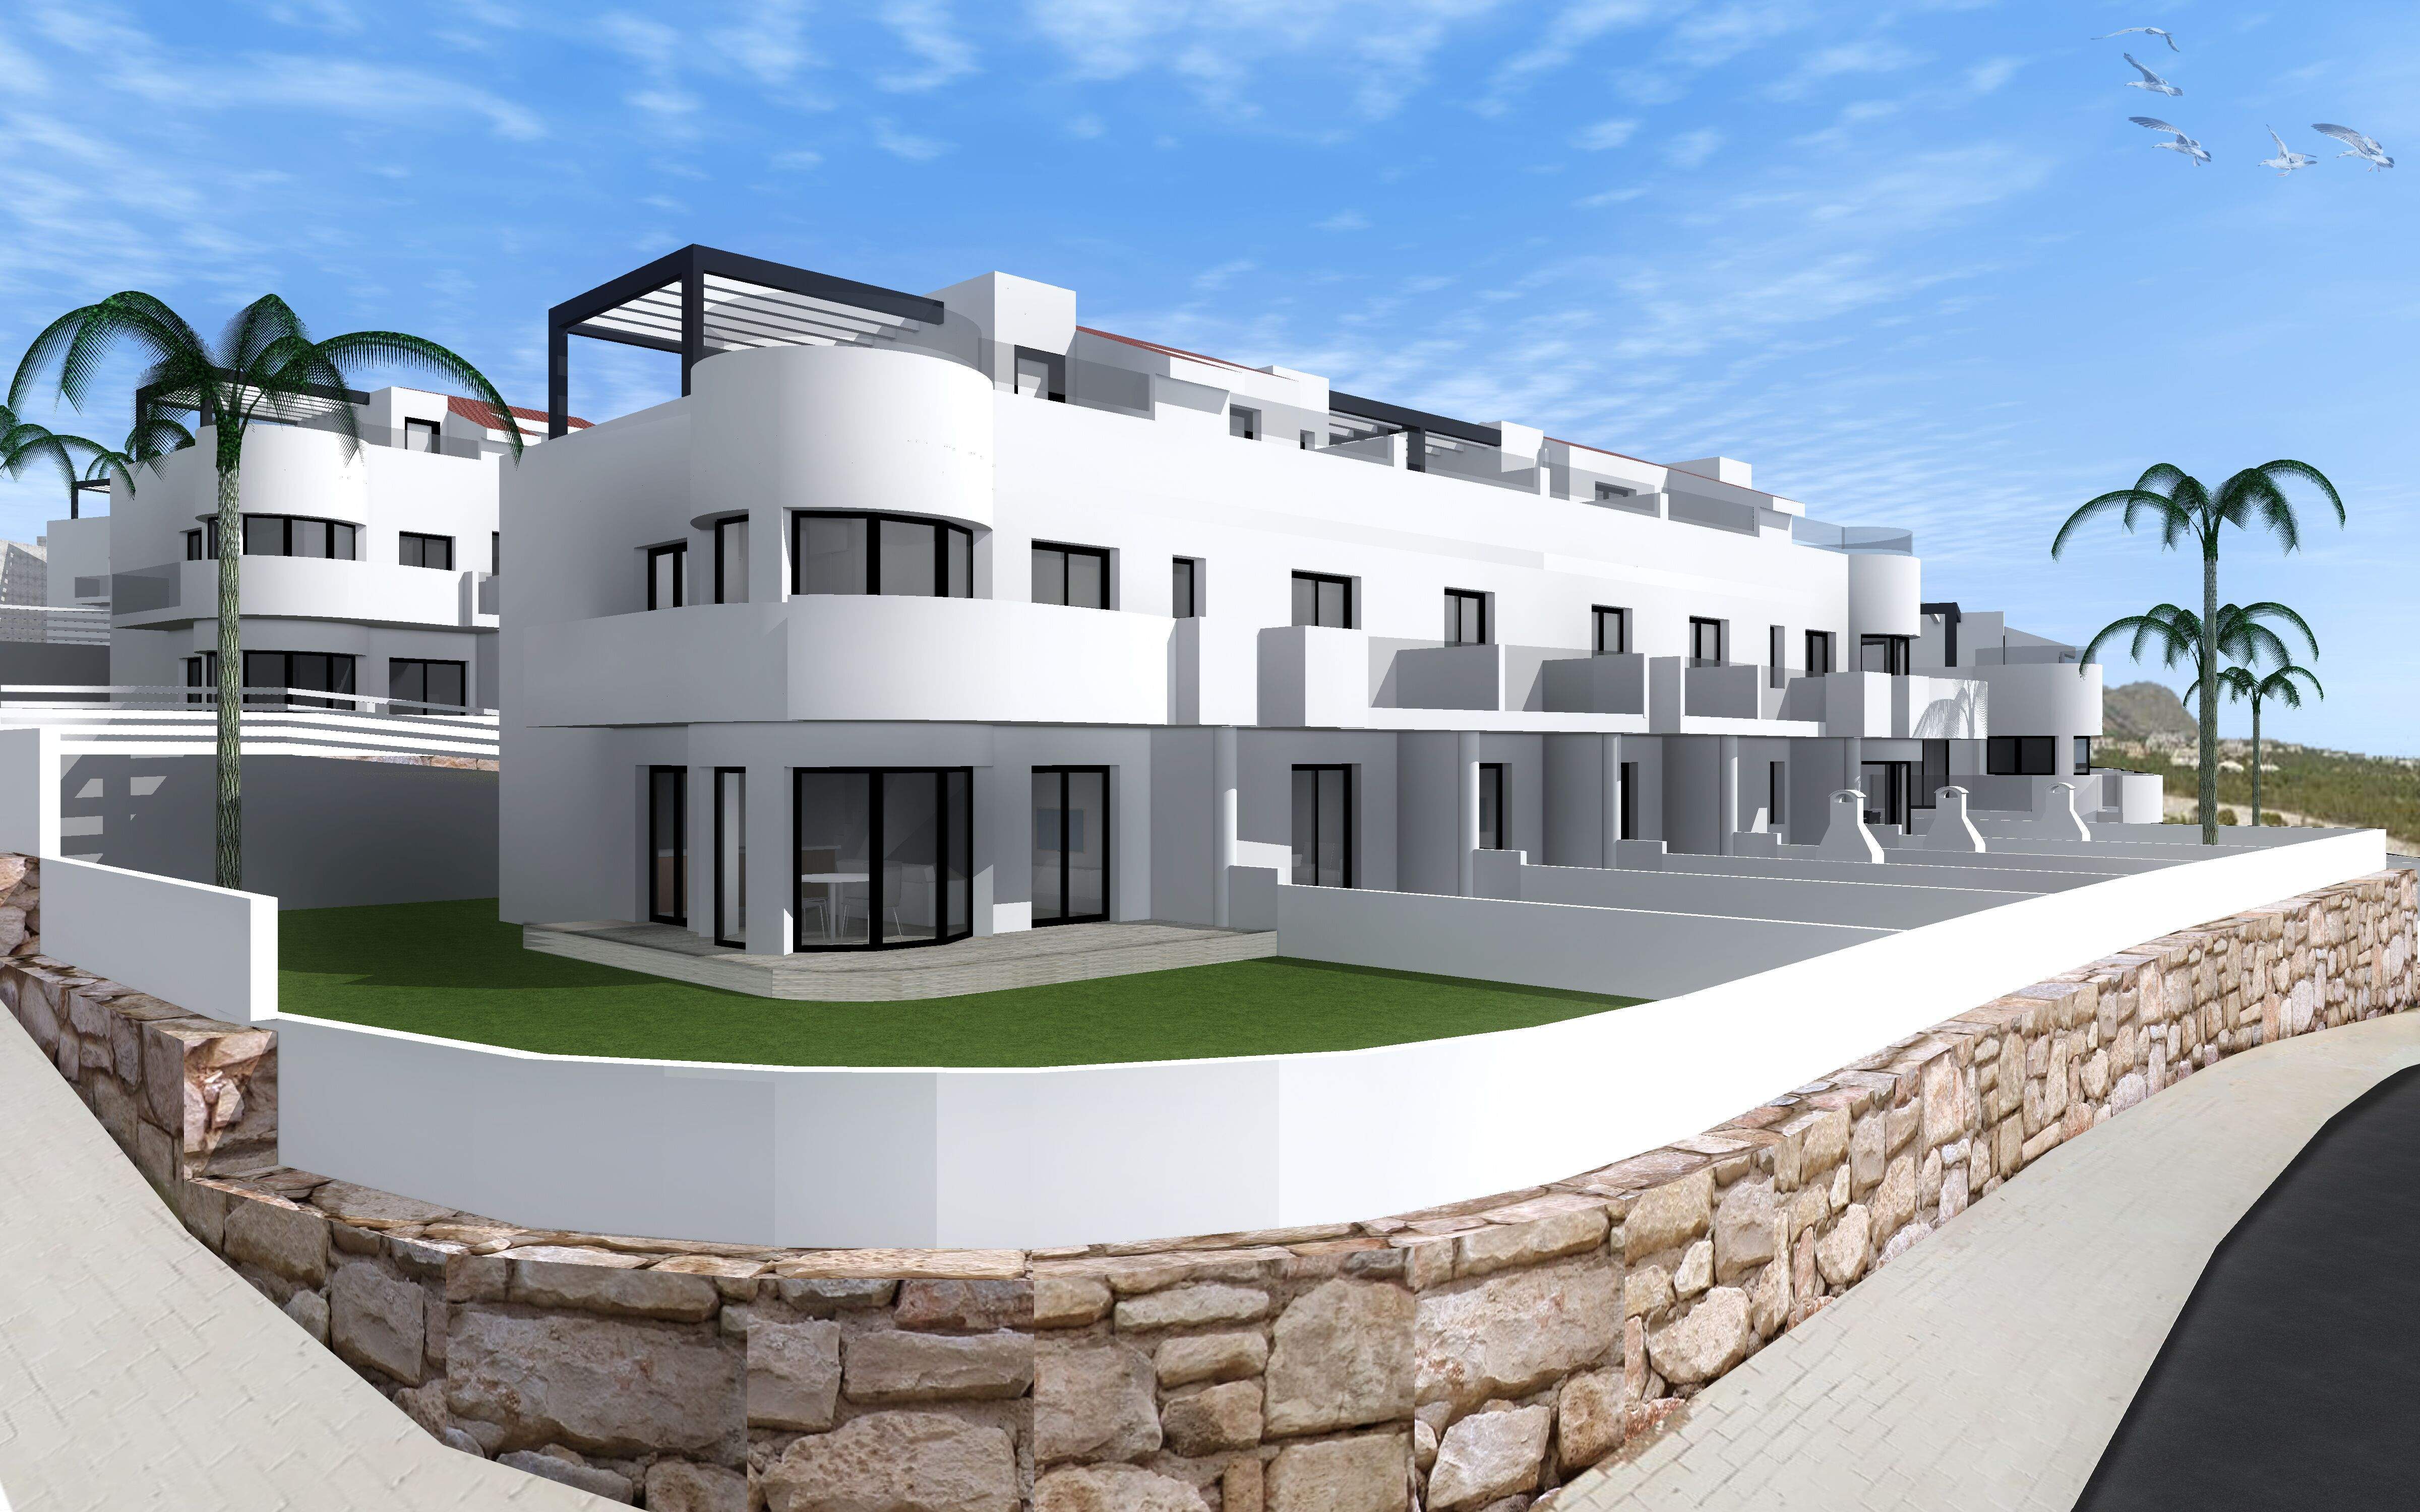 Property for Sale Panoramic Beach Resort Townhouses, Spain, Costa Blanca, Benidorm | Villacarte